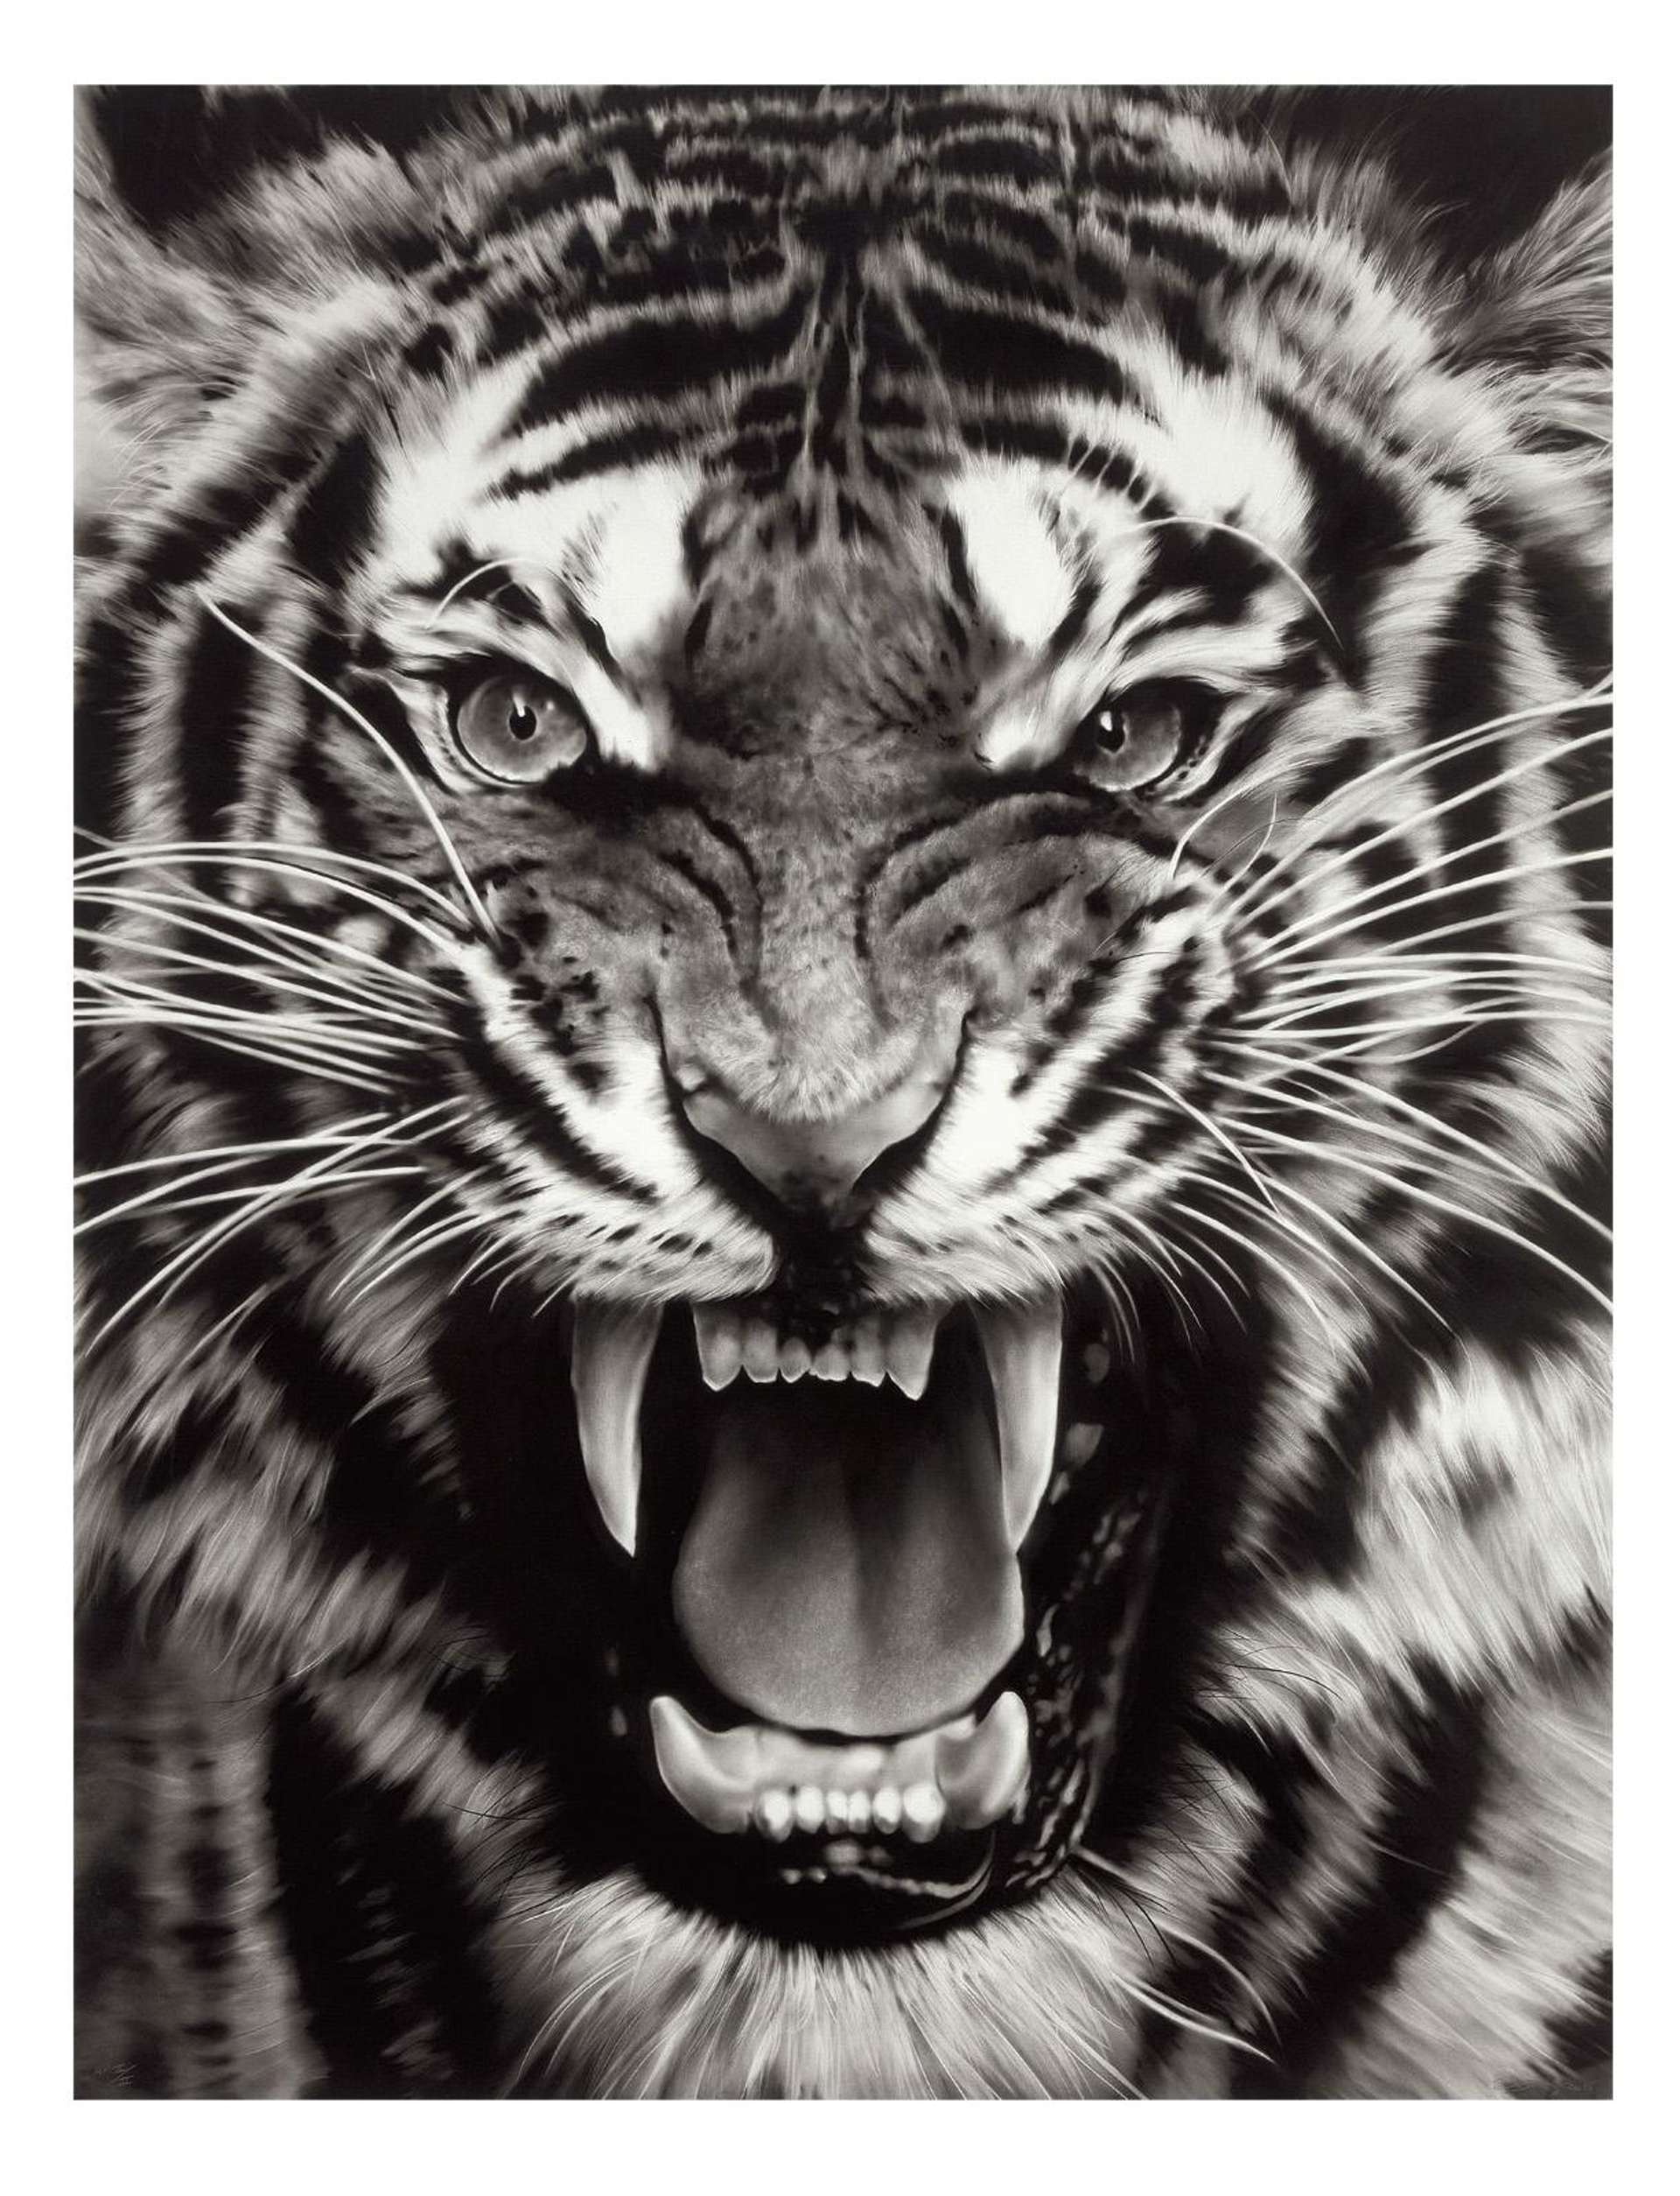 Untitled (Roaring Tiger Print) - Signed Print by Robert Longo 2015 - MyArtBroker